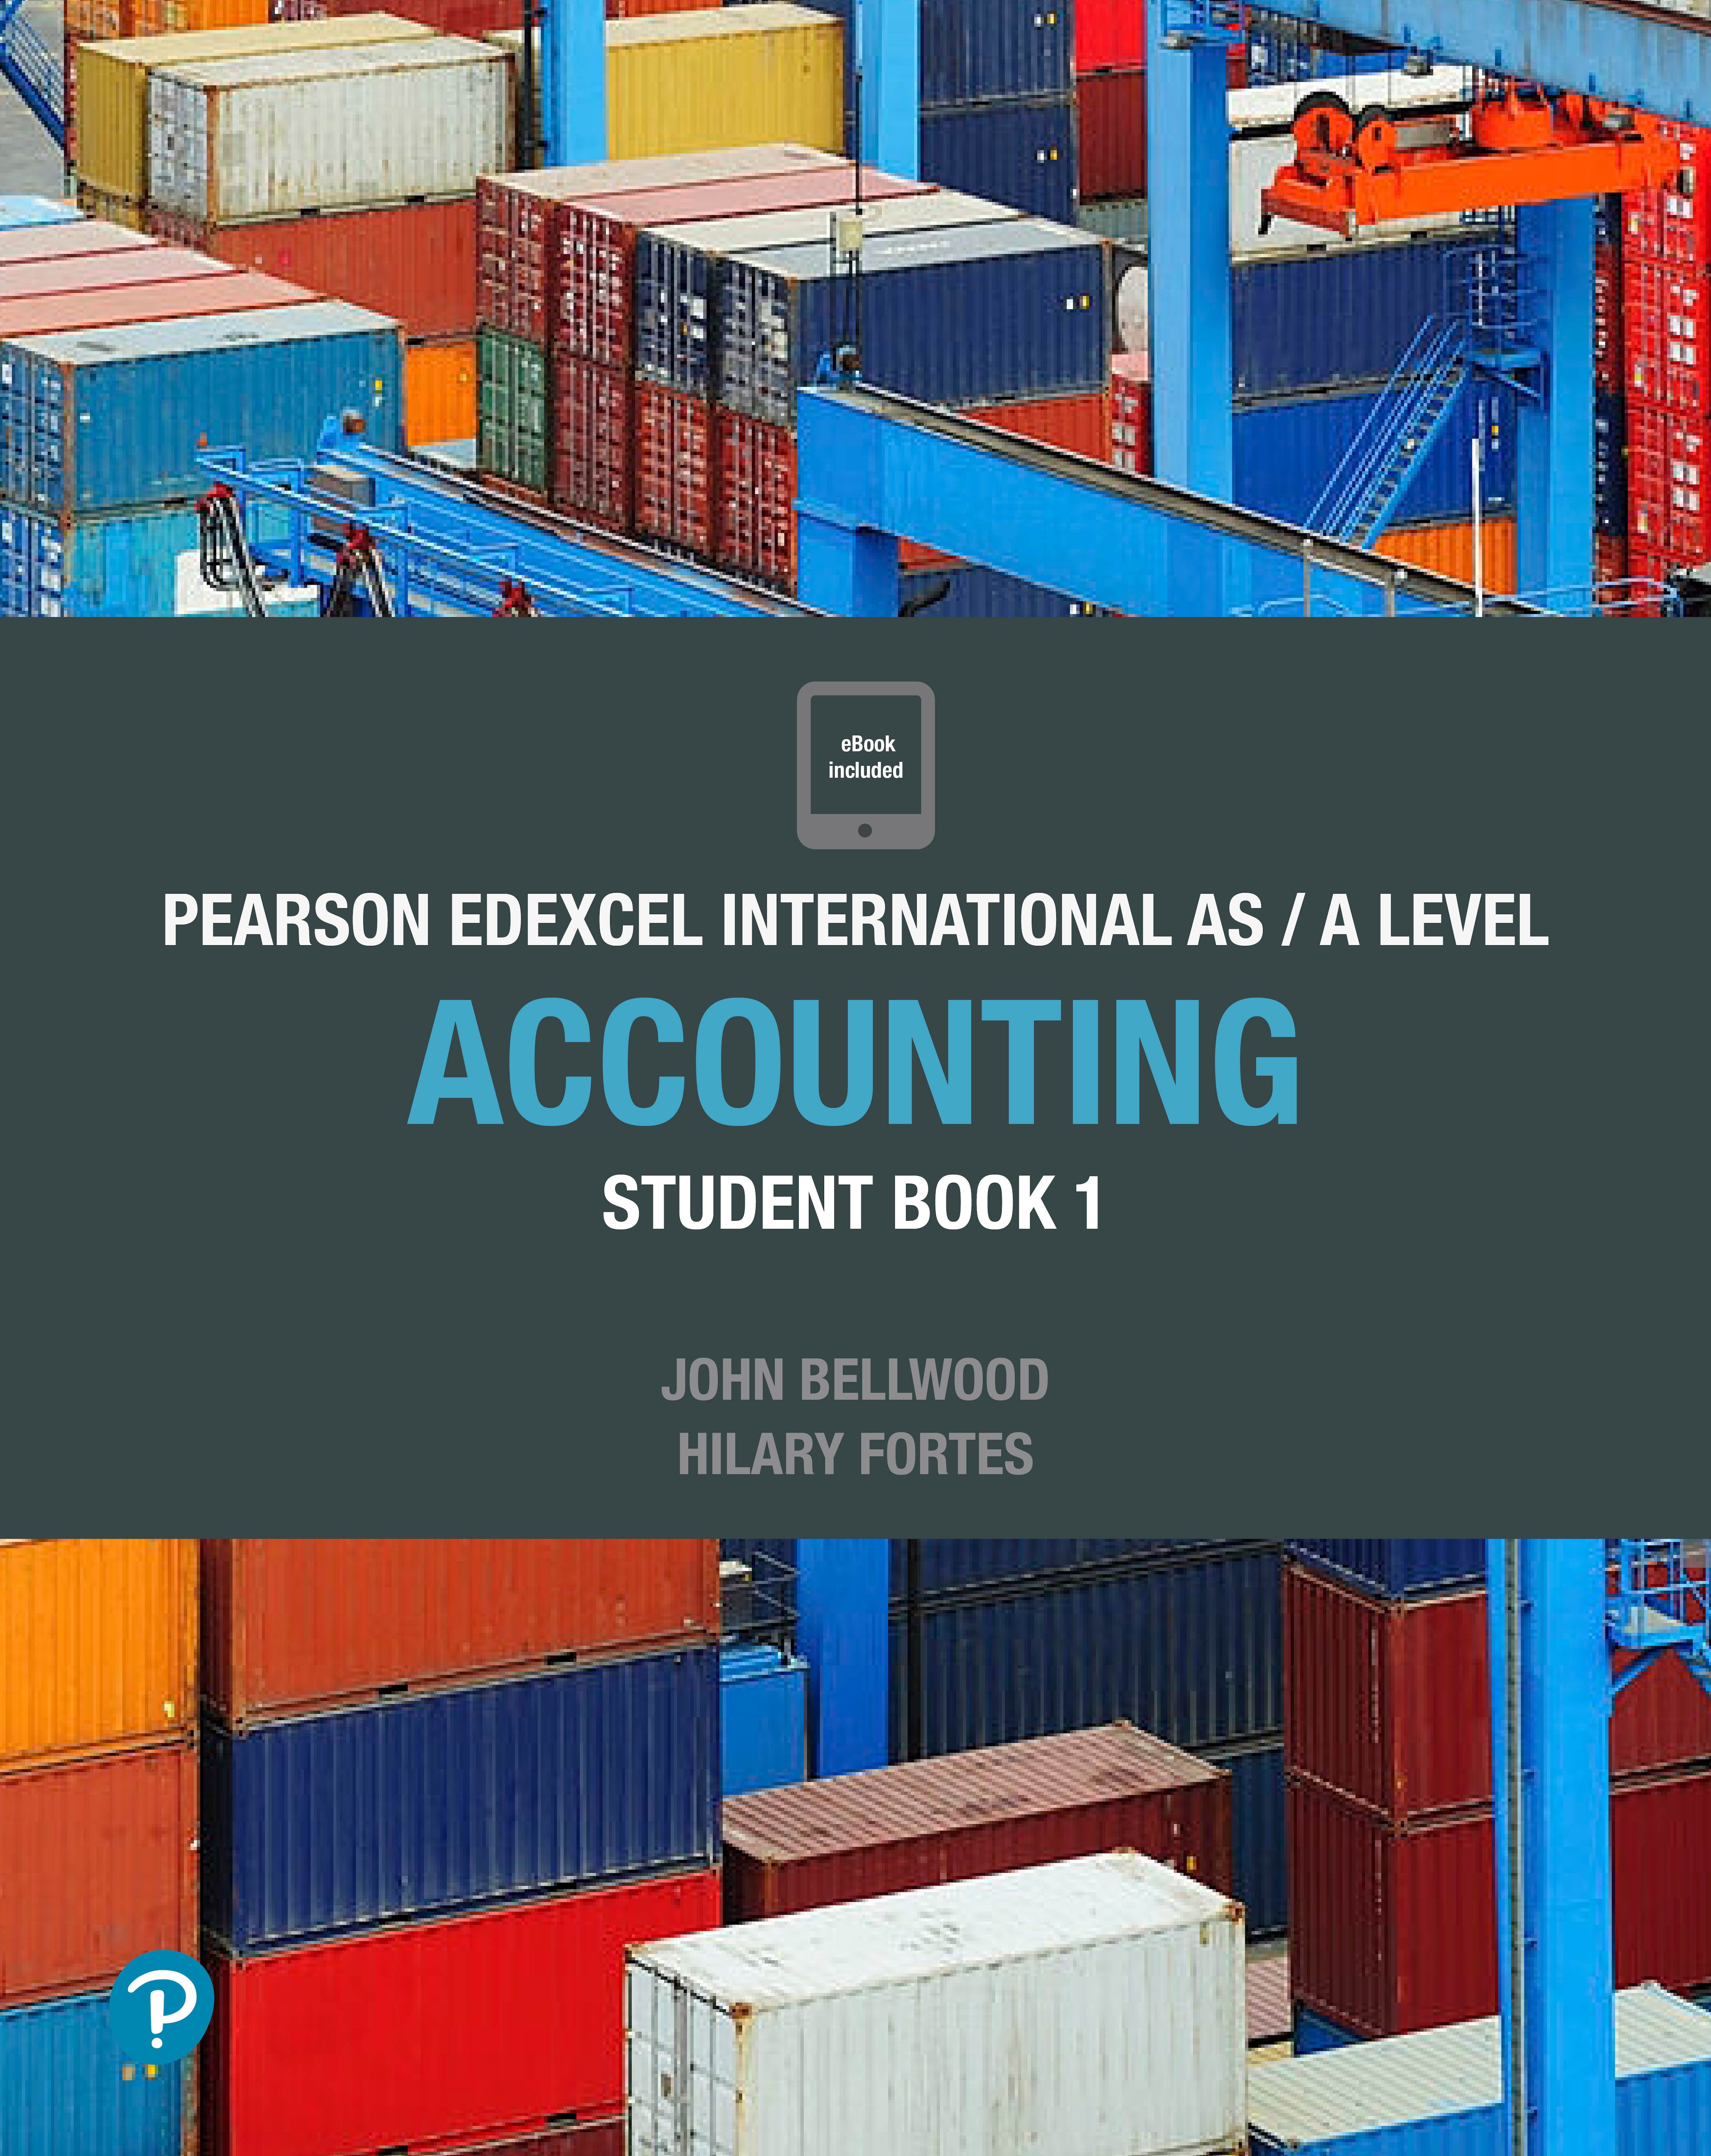 Pearson Edexcel International Advanced Level Accounting cover